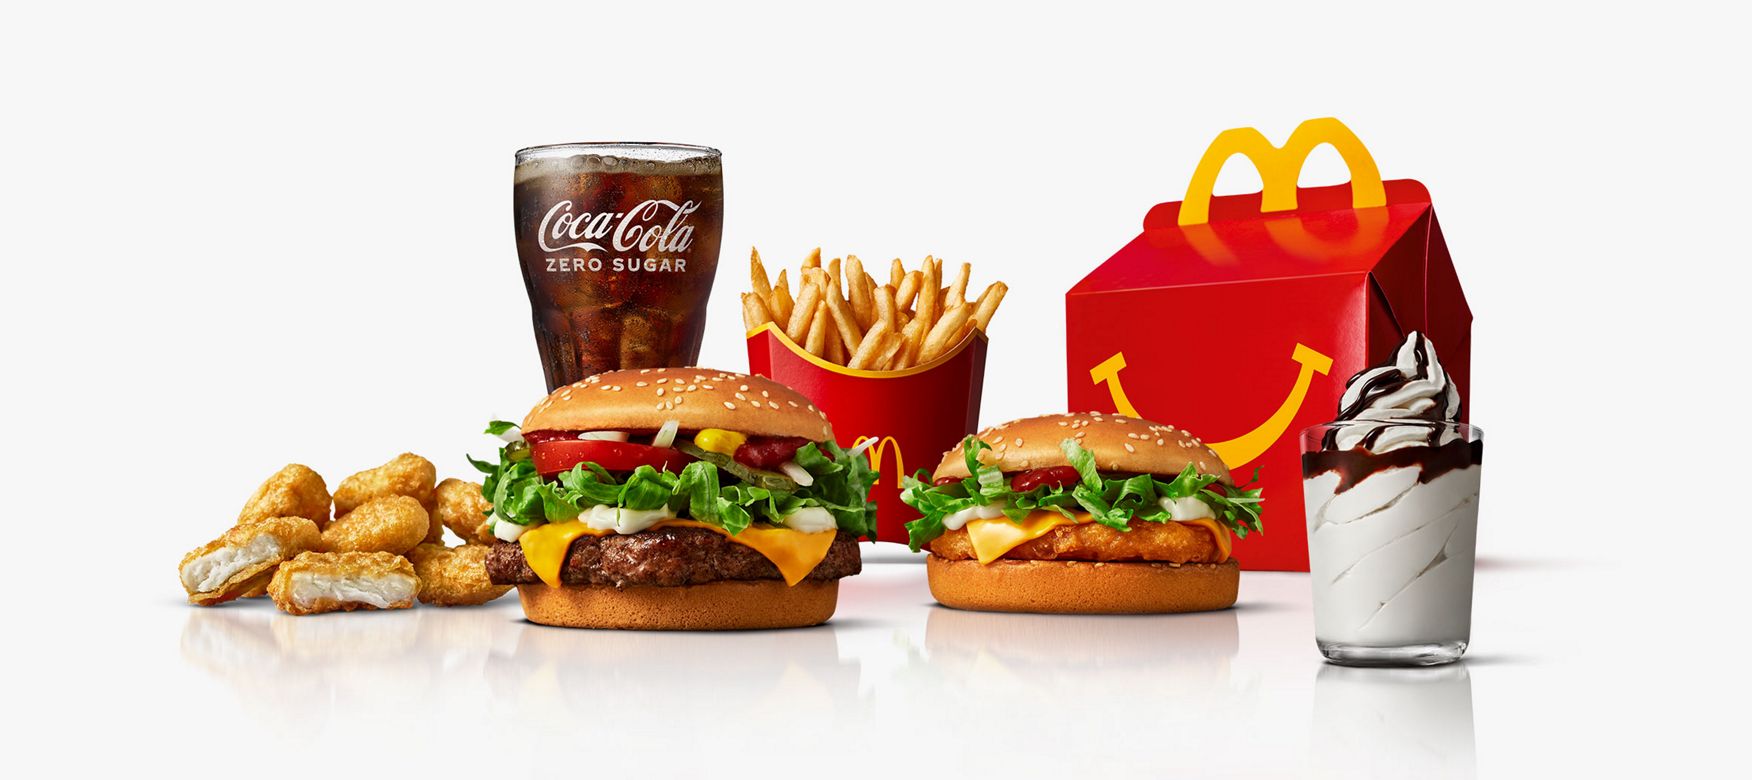 kompromis Madison faktum McDonald's Danmark